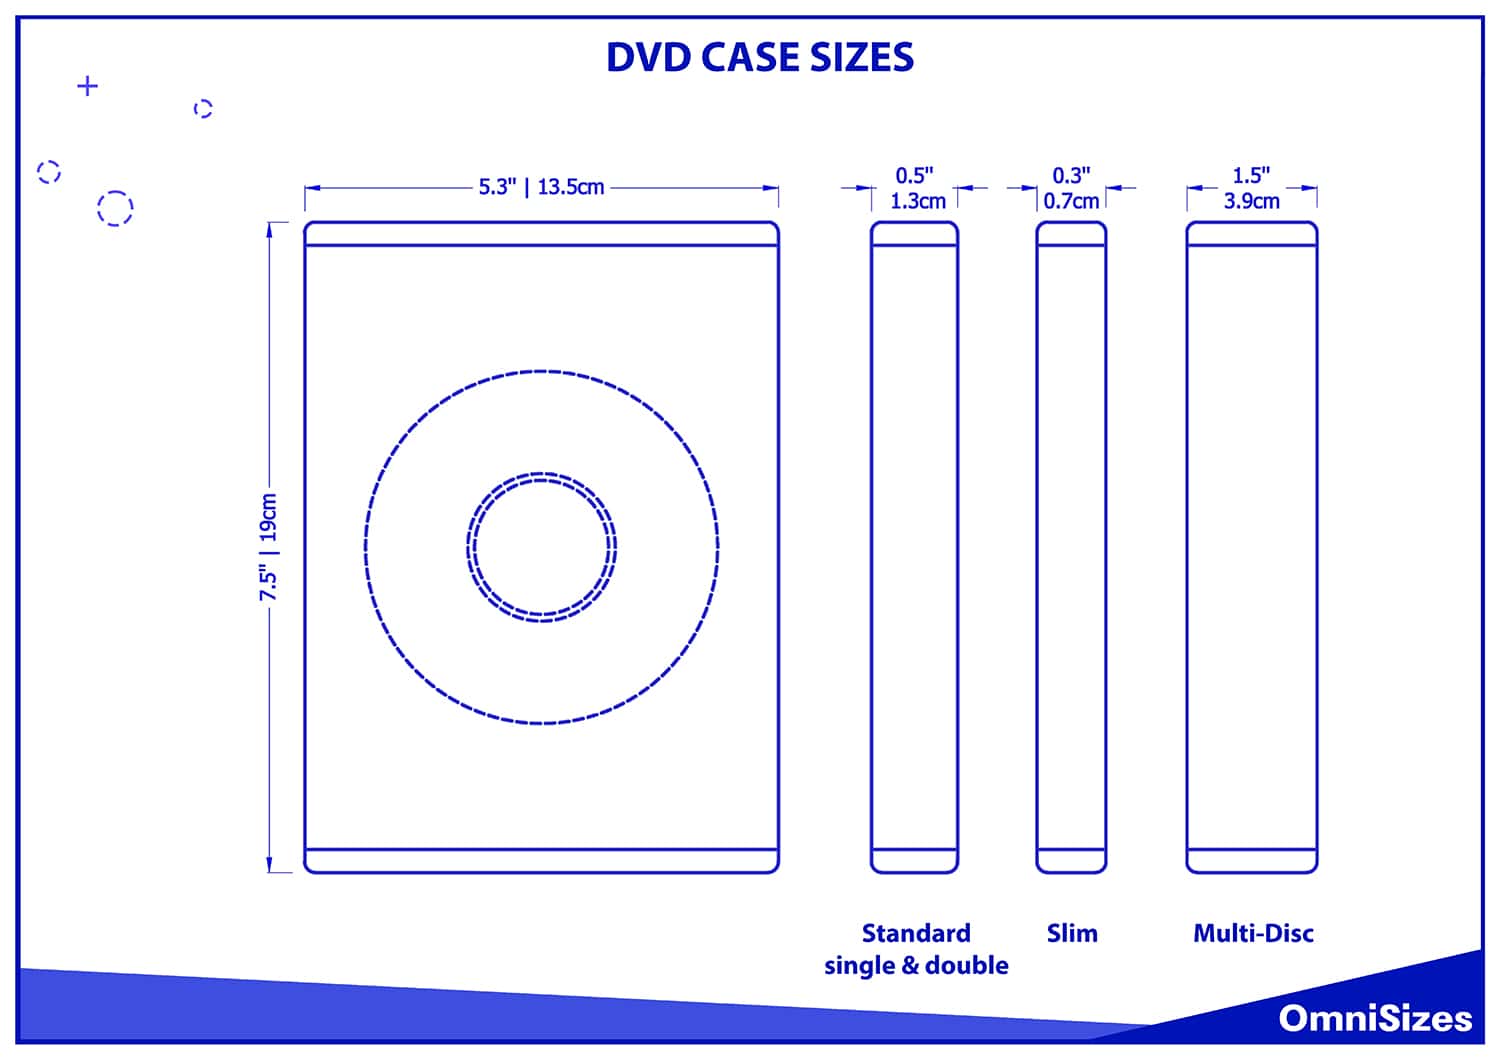 DVD case sizes